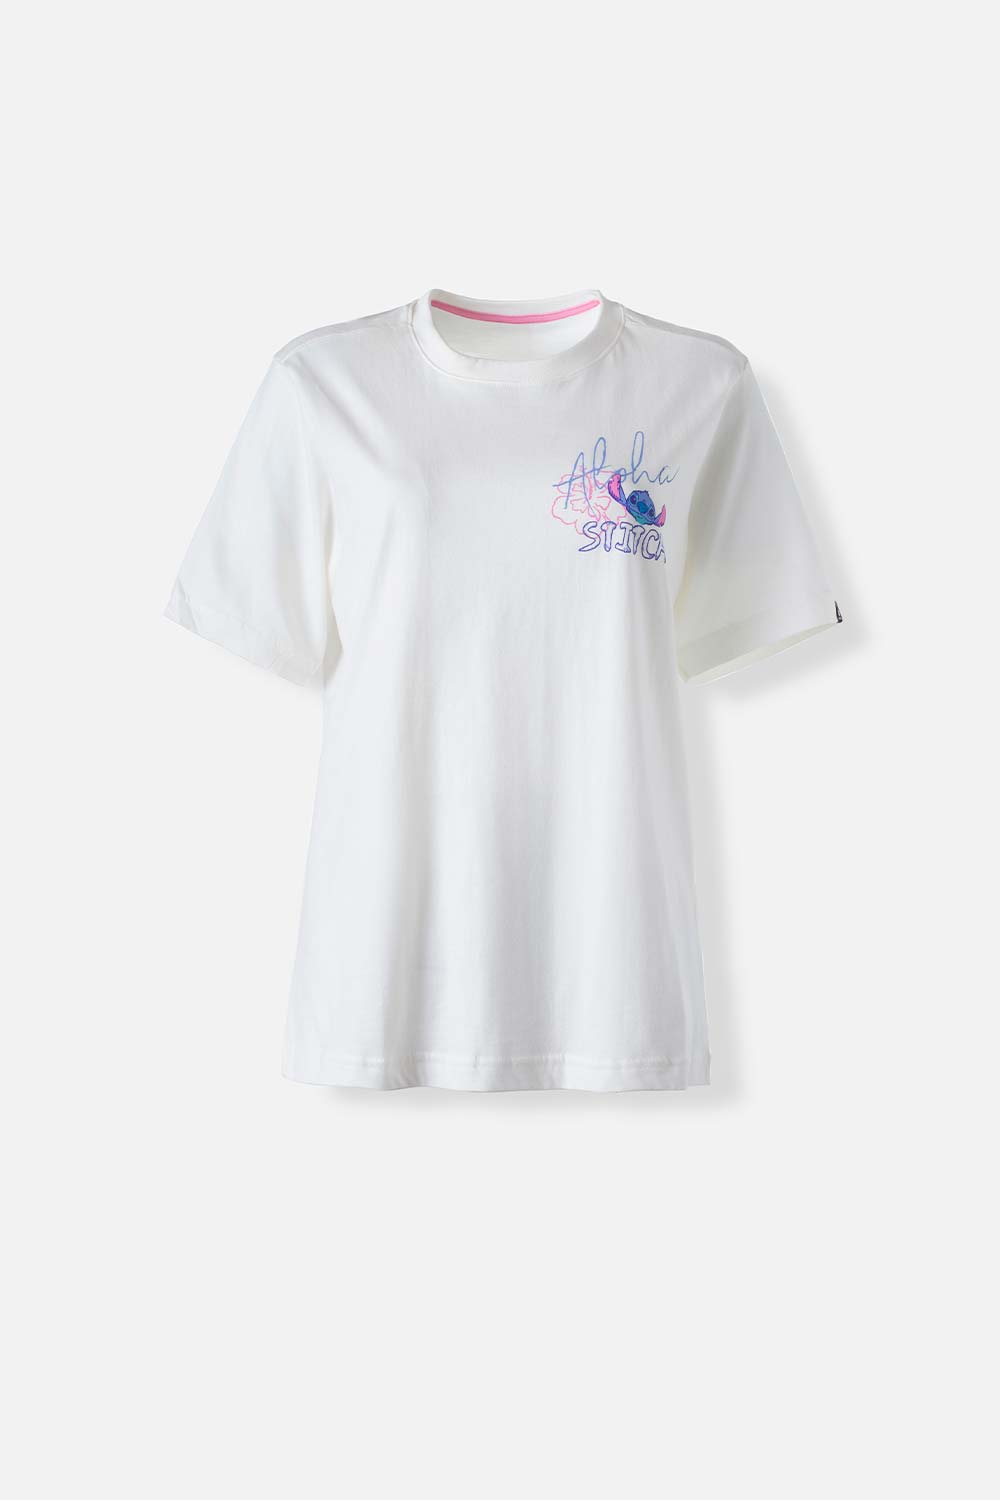 Camiseta de Stitch marfil estampada en posterior para mujer XS-0